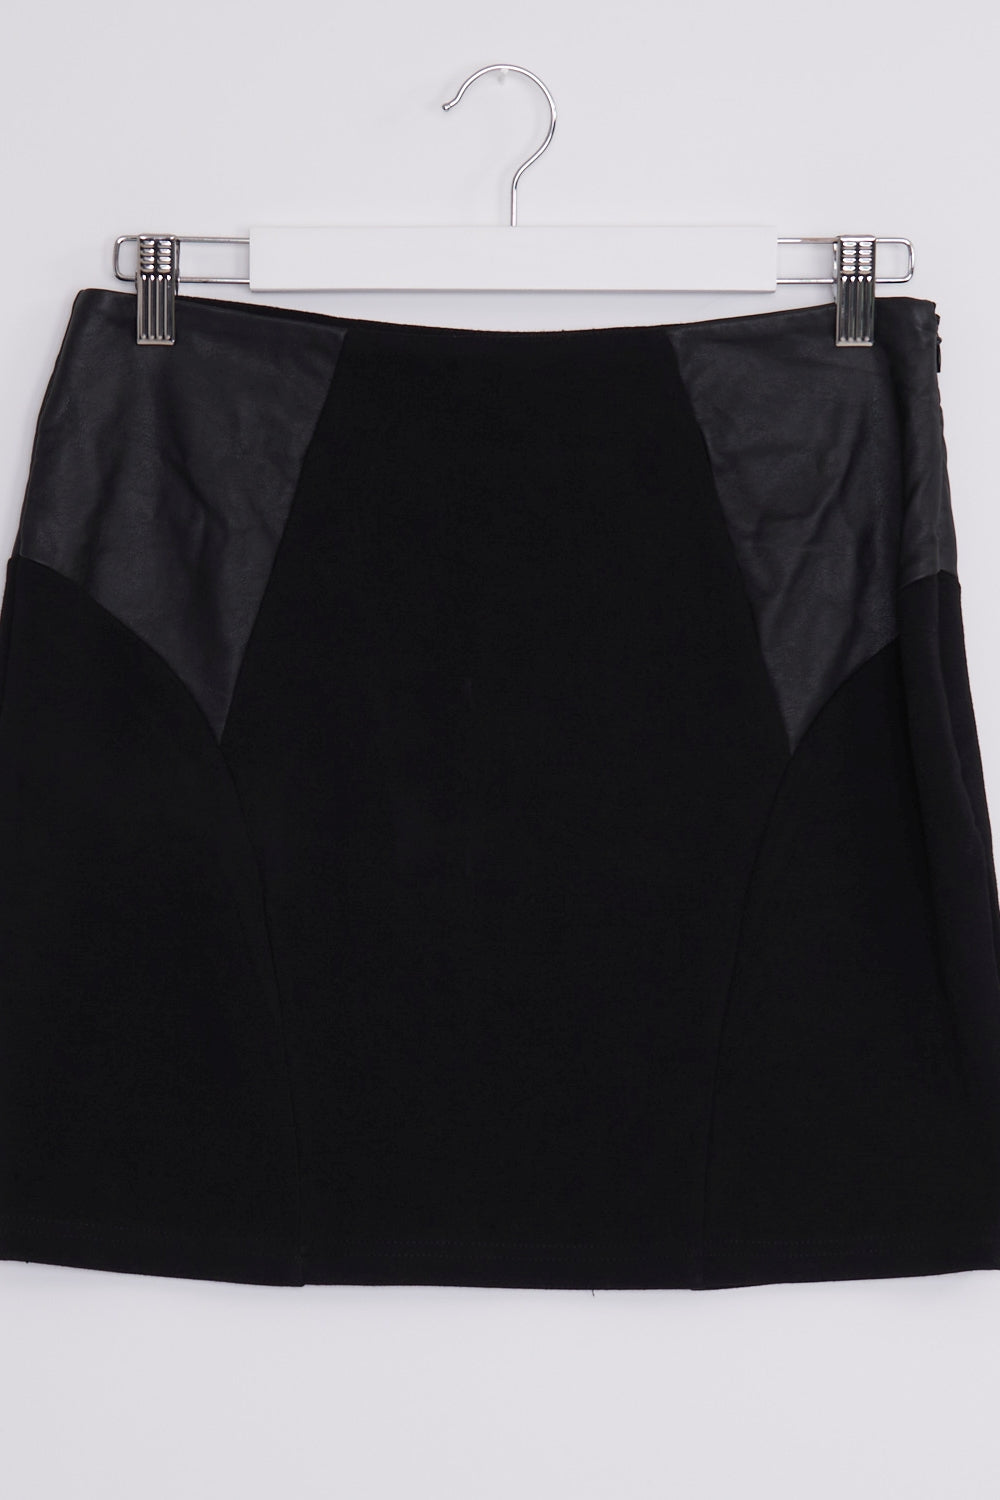 Ally Fashion Black Faux Leather Detail Mini Skirt 12